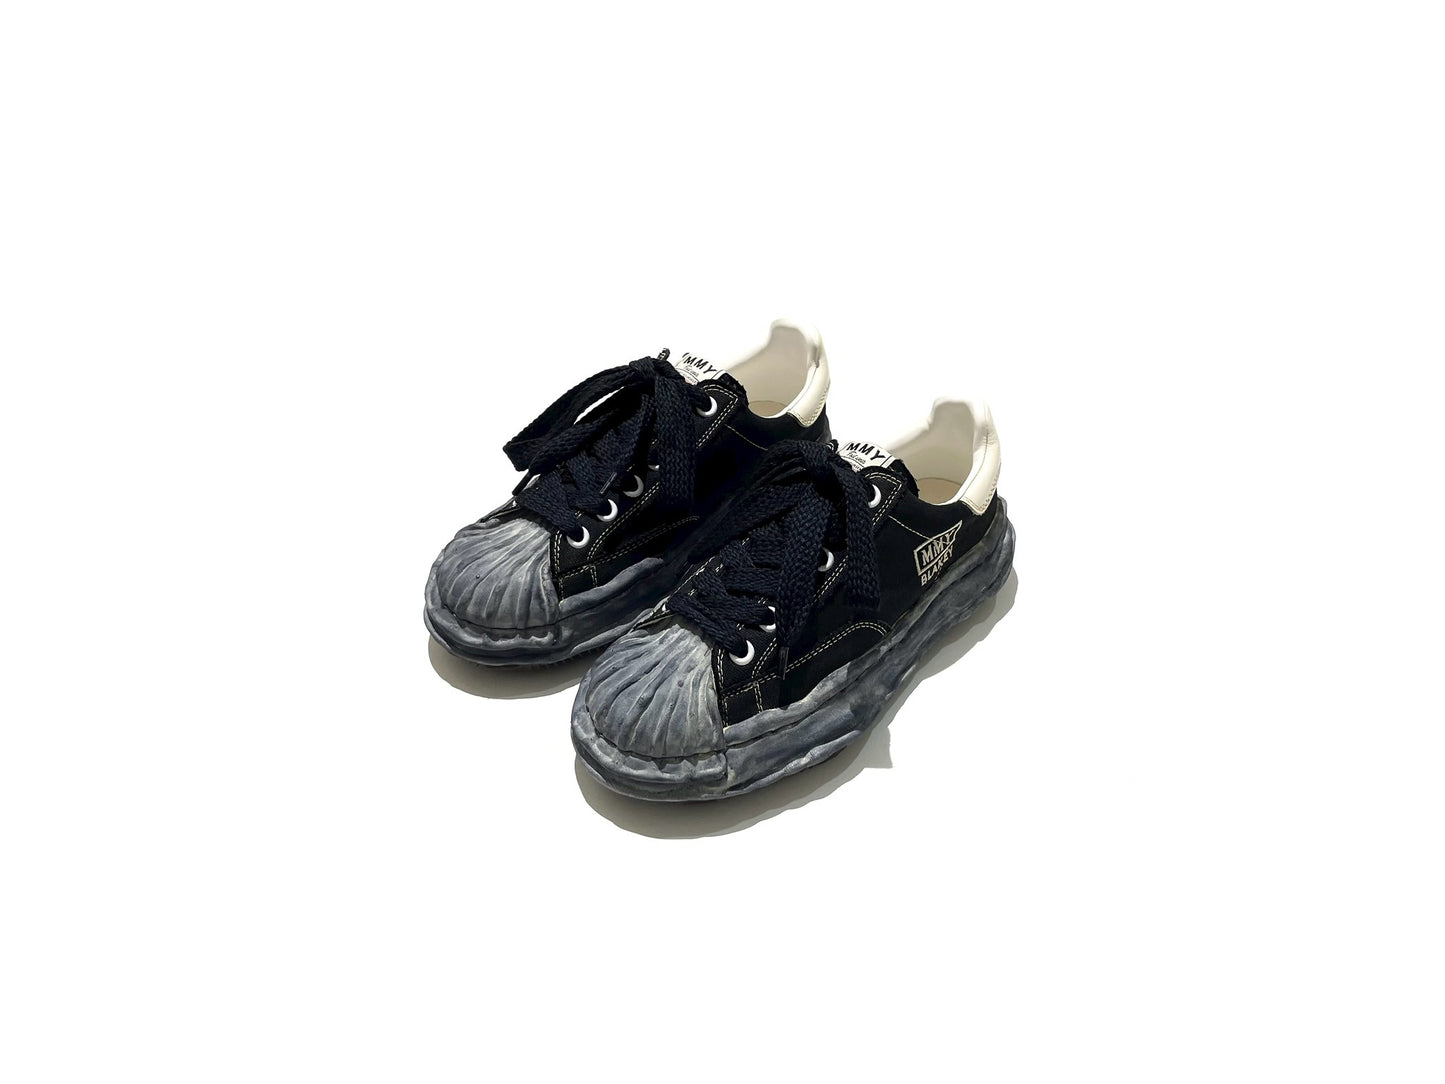 〖 Special Order 〗 Maison Mihara Yasuhiro Over Dyed OG Sole Sneaker - Blakey